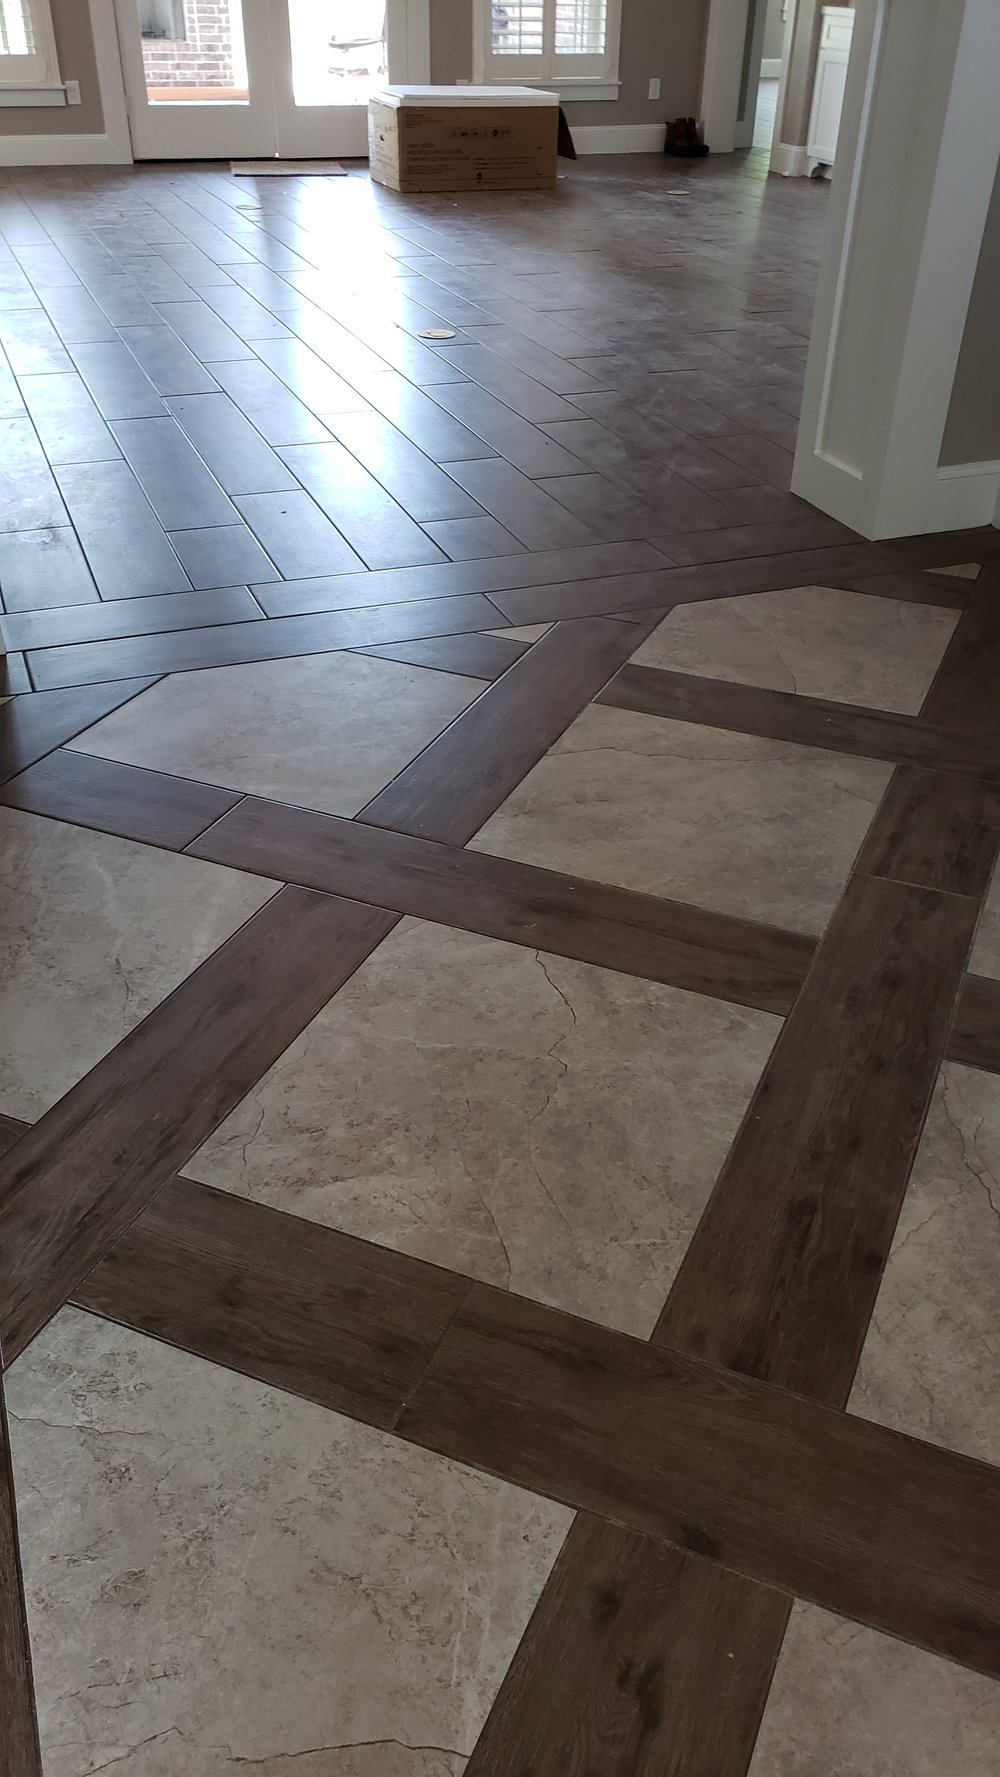 Floors2Interiors Photo Gallery : Tile and hardwood